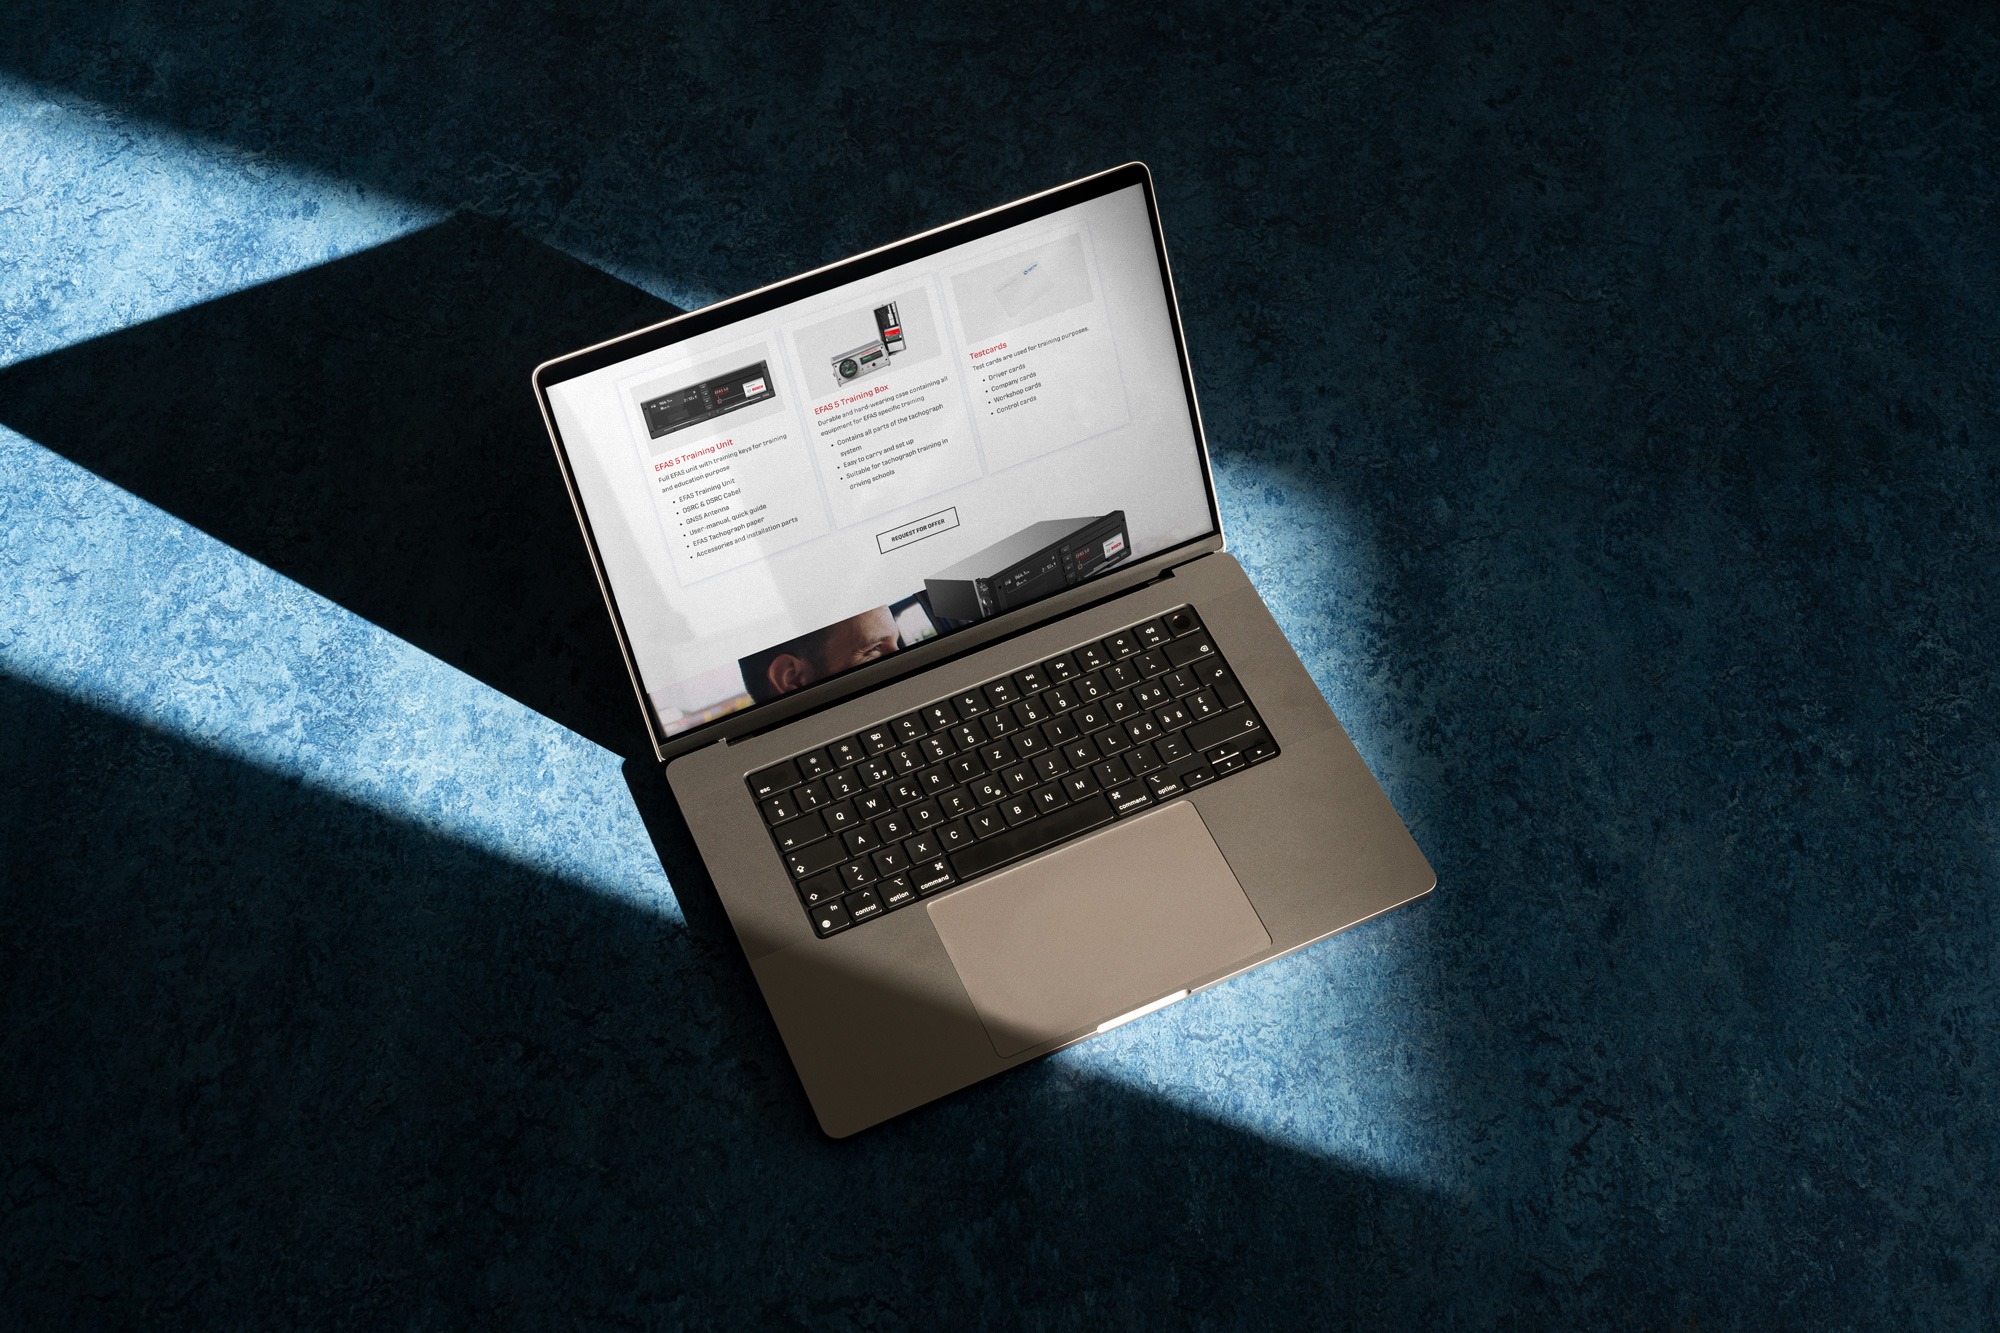 An Intellic laptop on a blue surface.